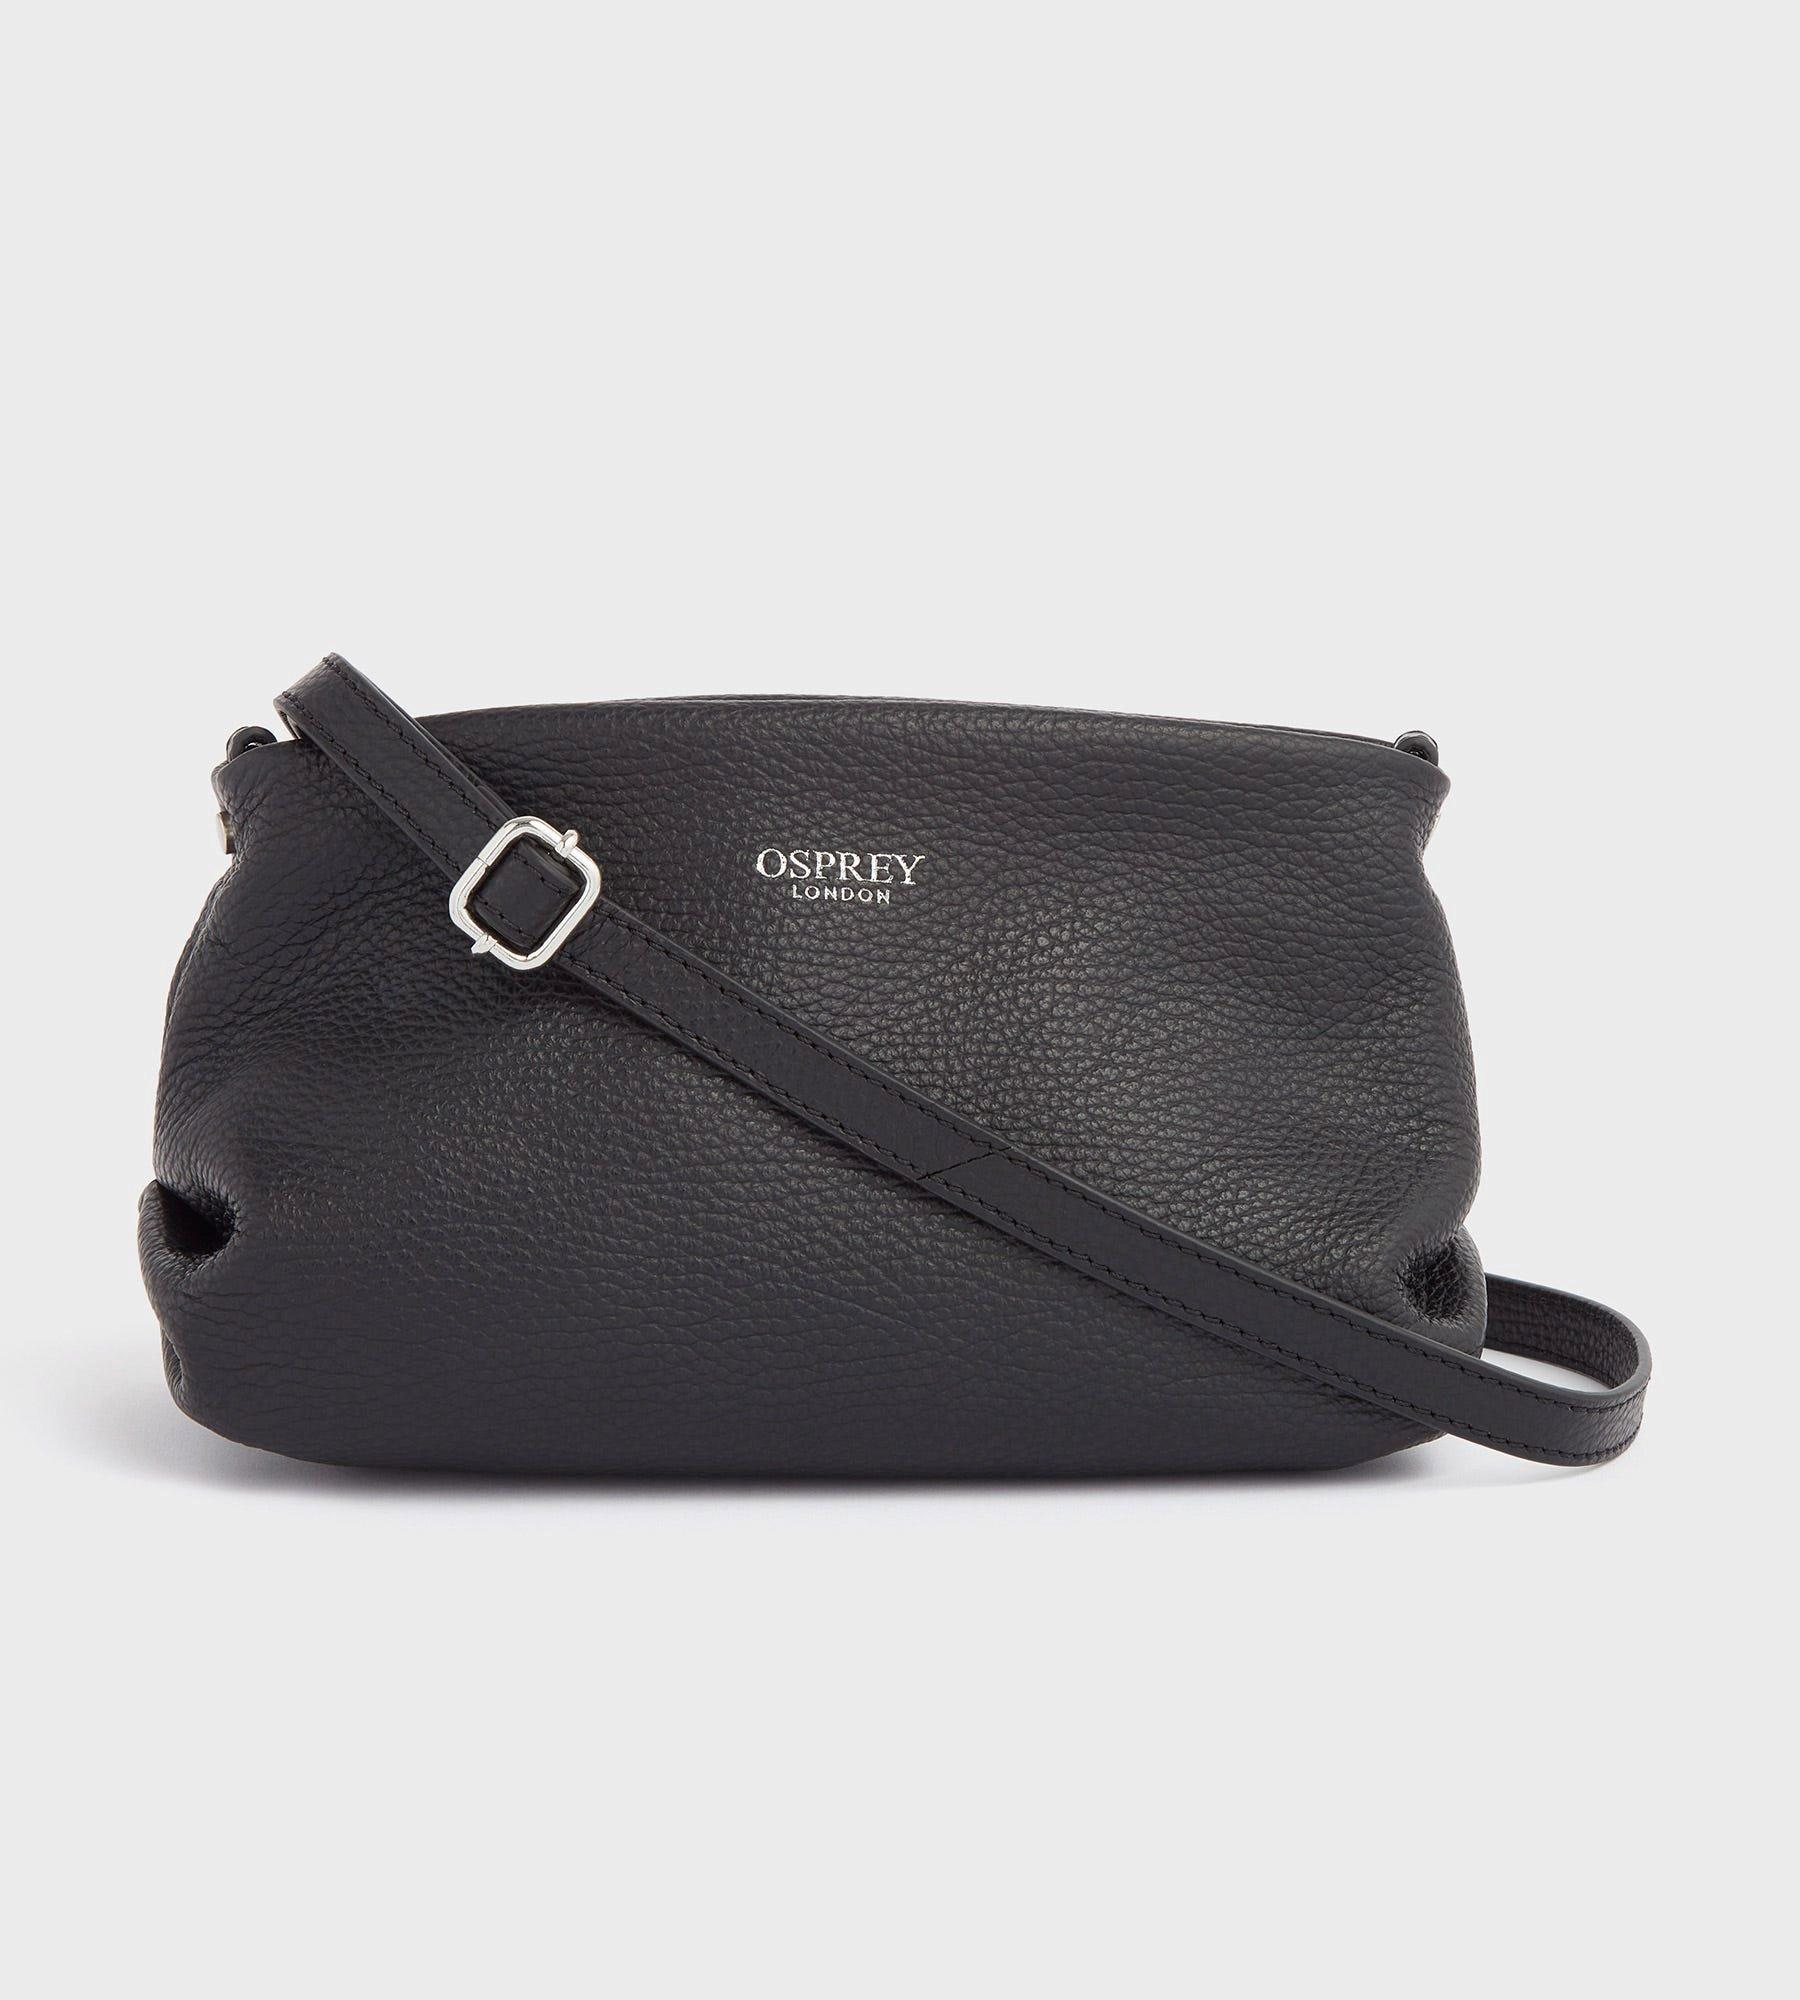 Osprey Leather Bag - Etsy